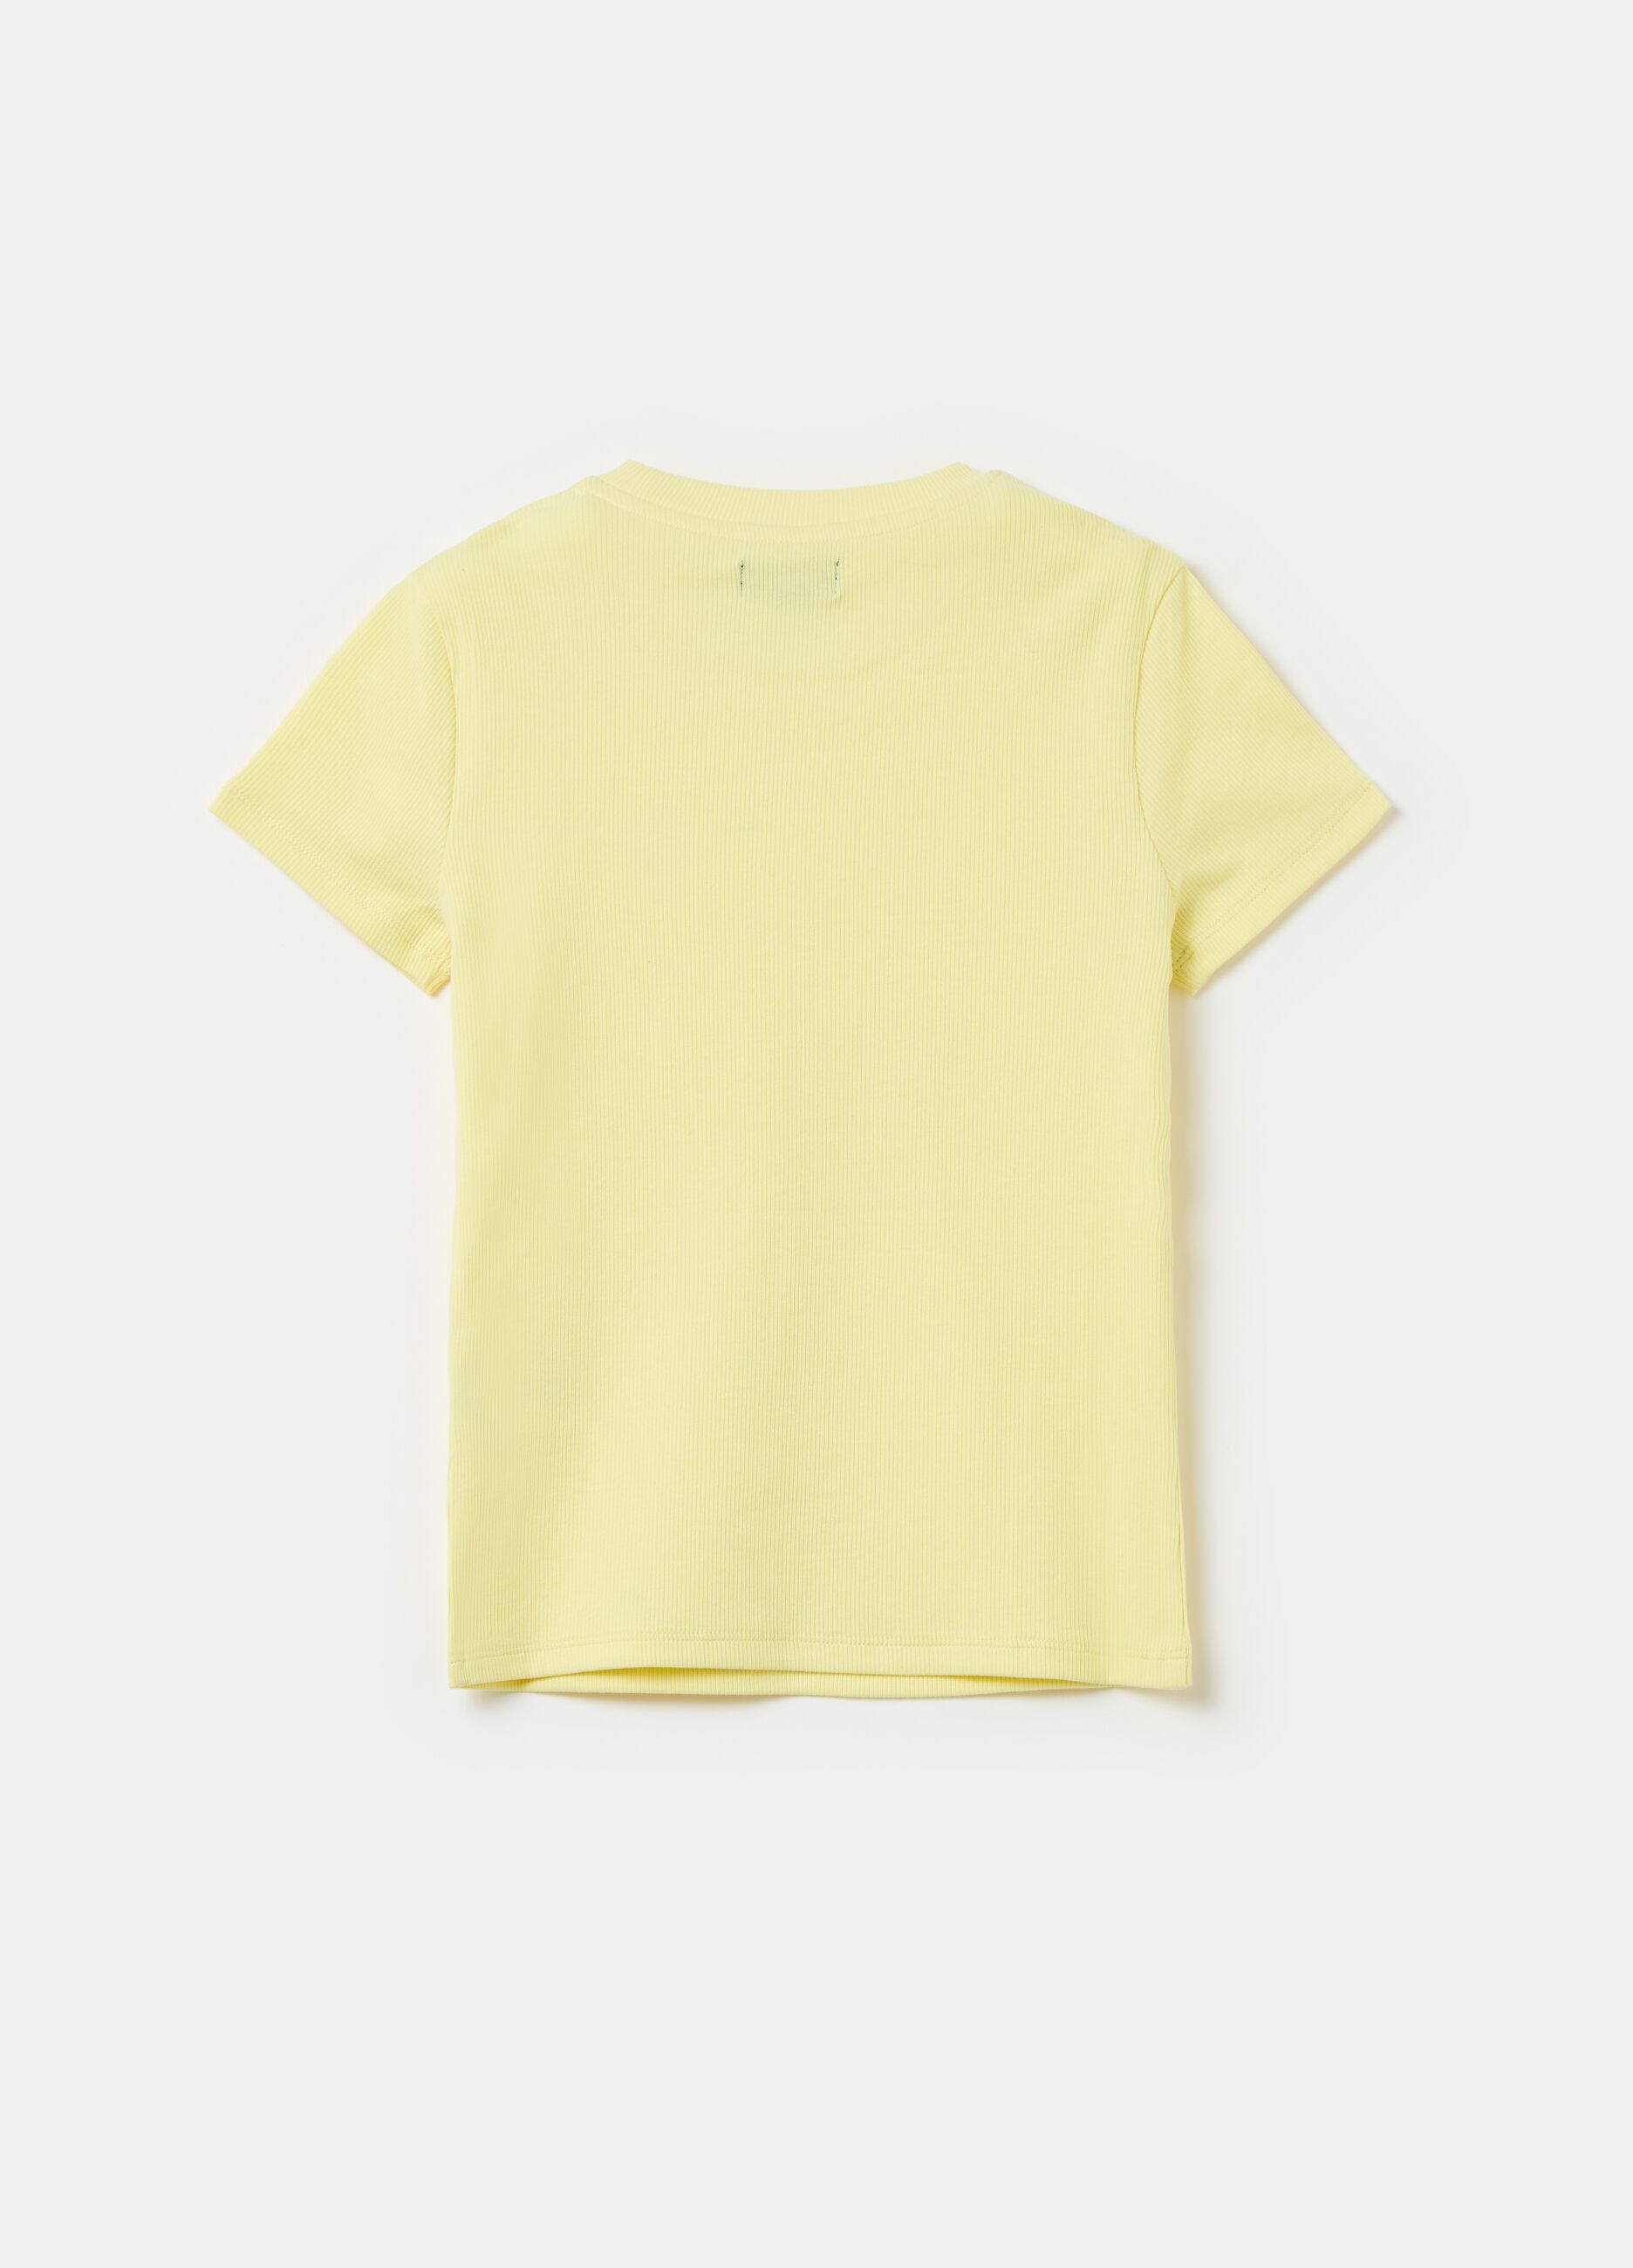 Camiseta color liso en canalé